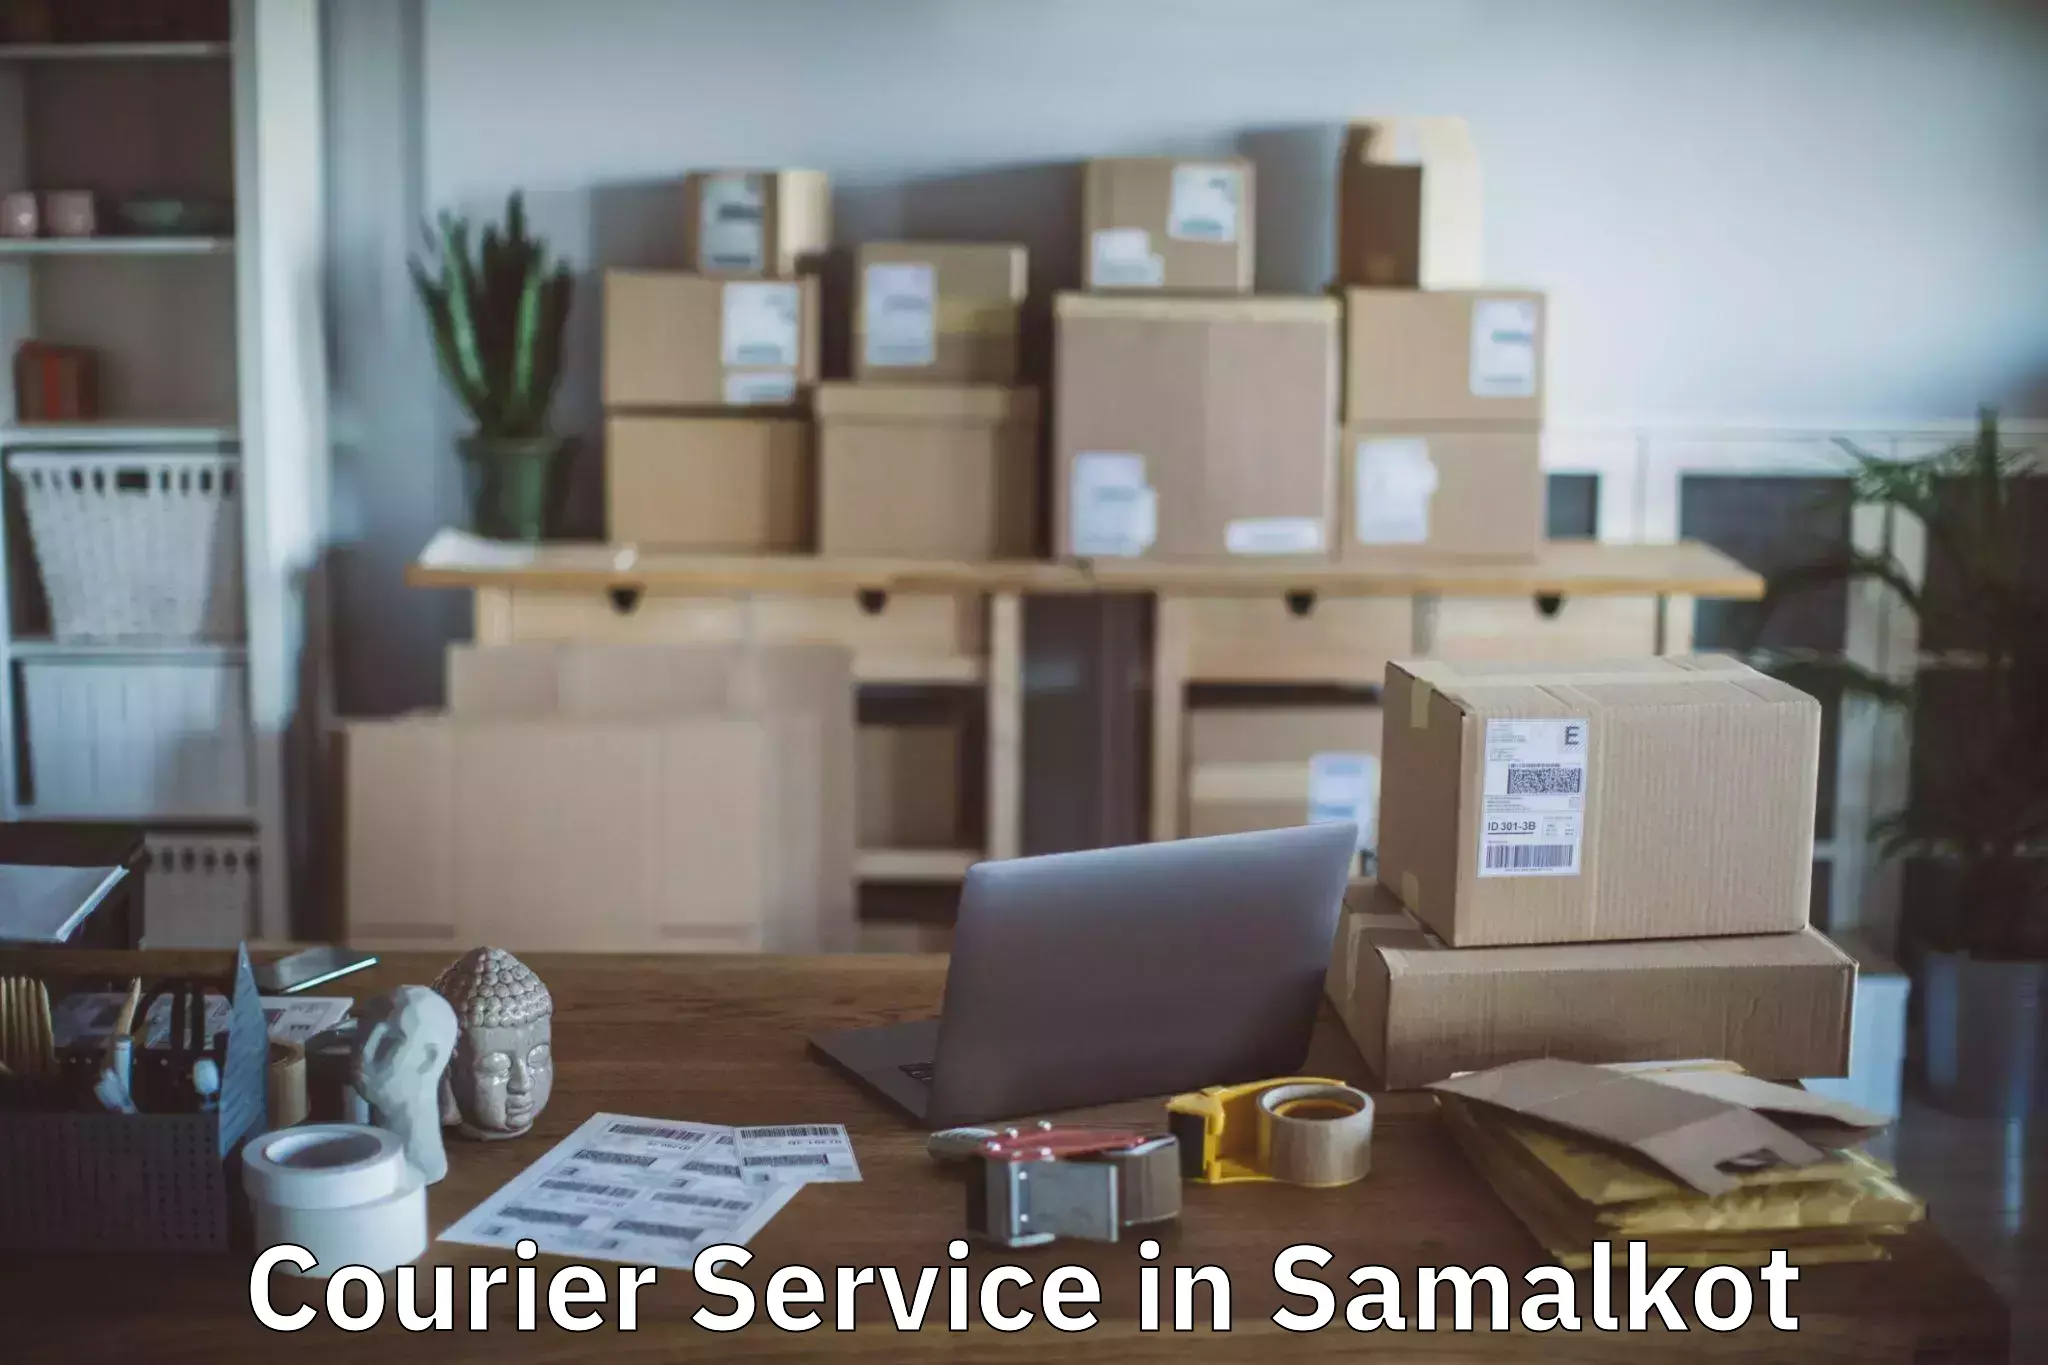 Efficient cargo services in Samalkot